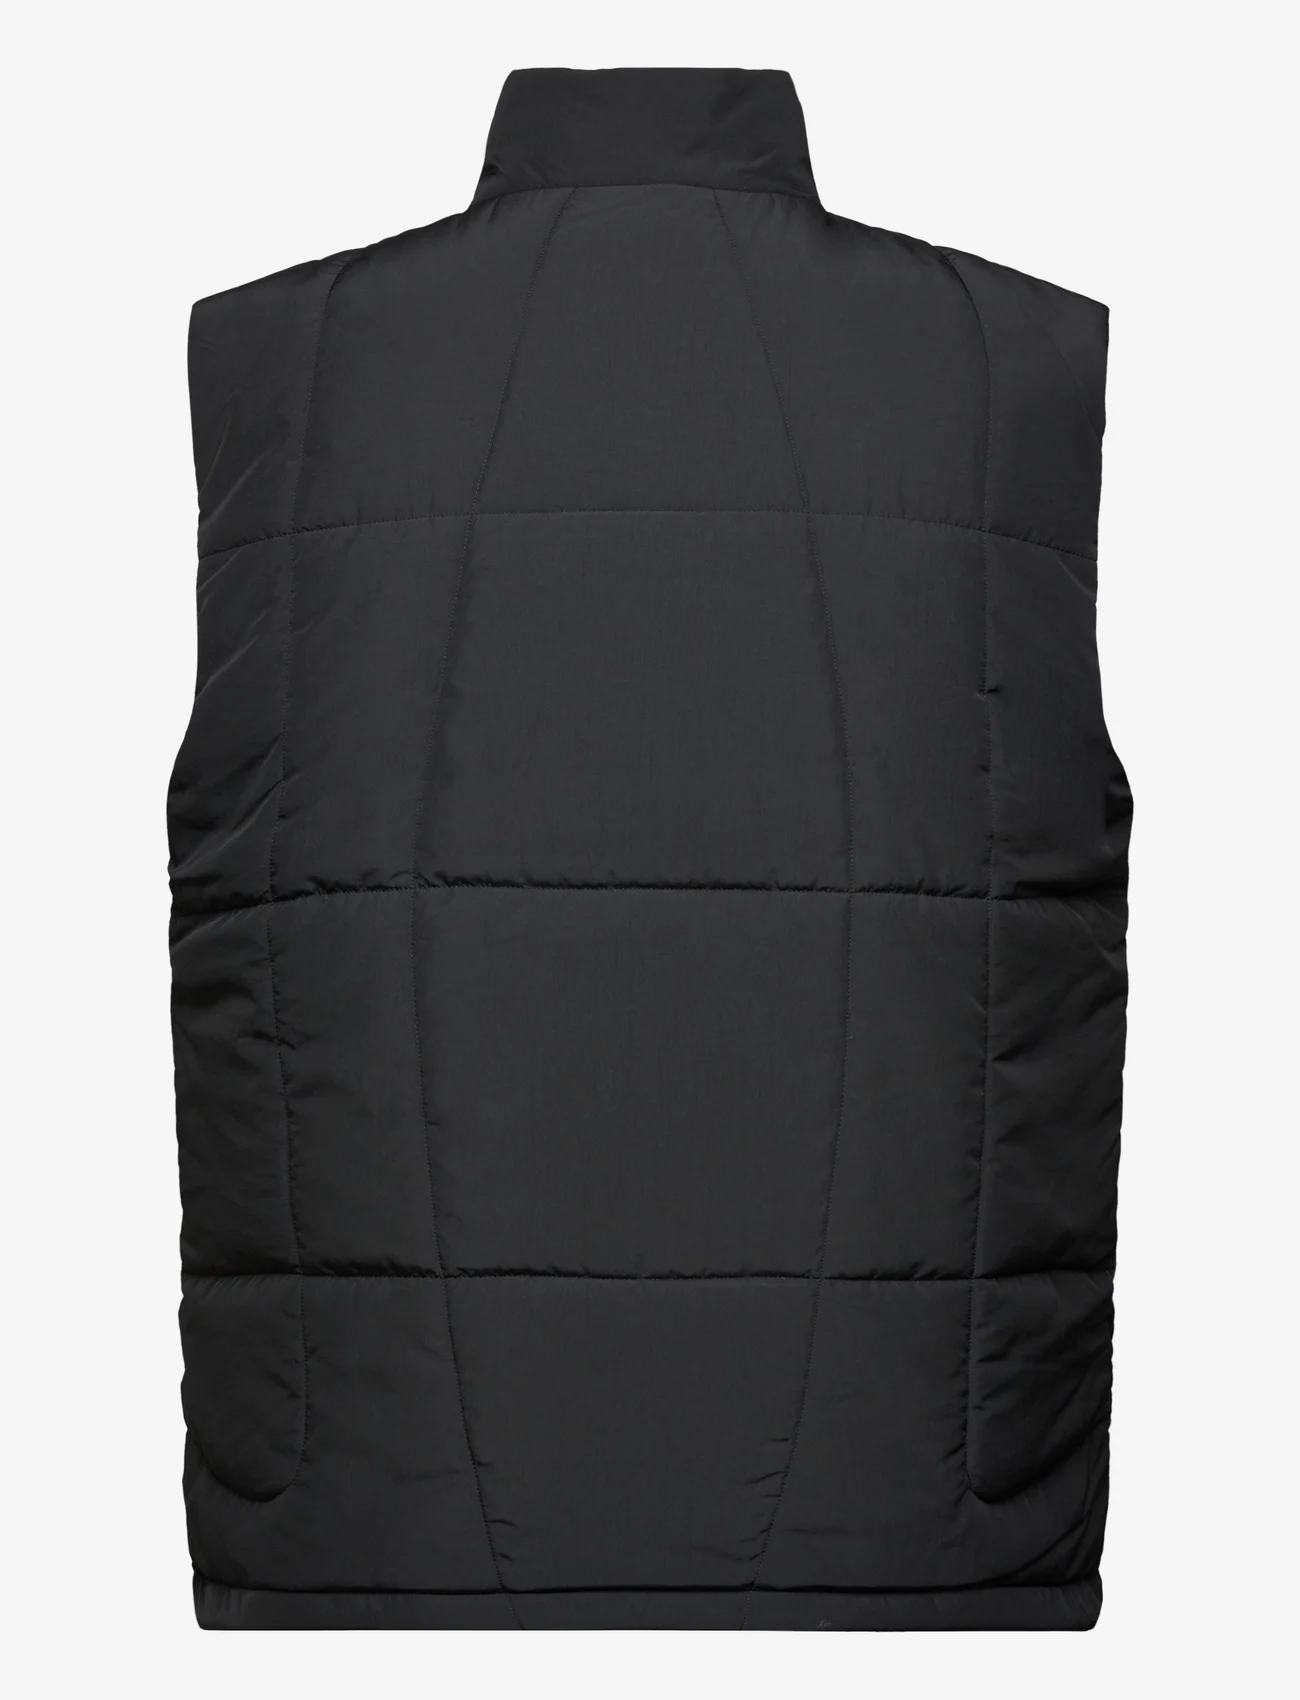 adidas Originals - ADV PADDED VEST - jakker og frakker - black - 1